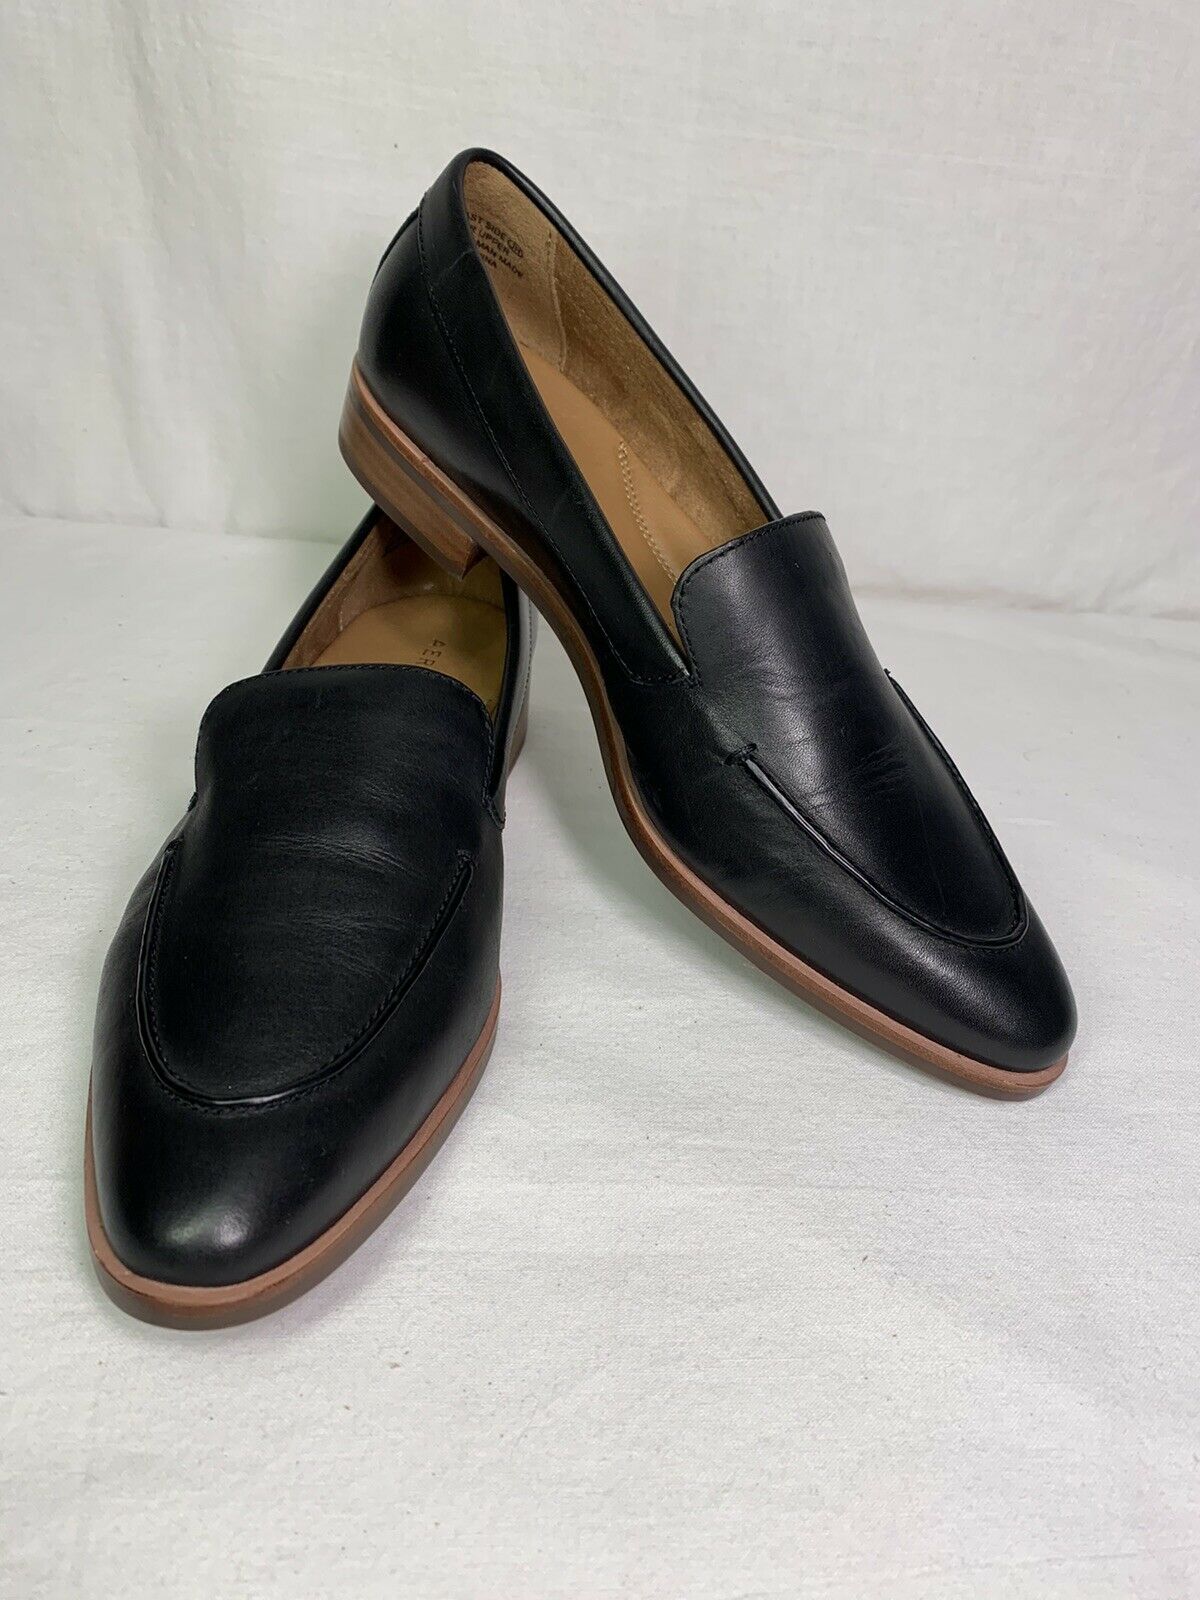 Aerosoles East Side Black Leather Loafers Flats Women’s Shoes Sz 10